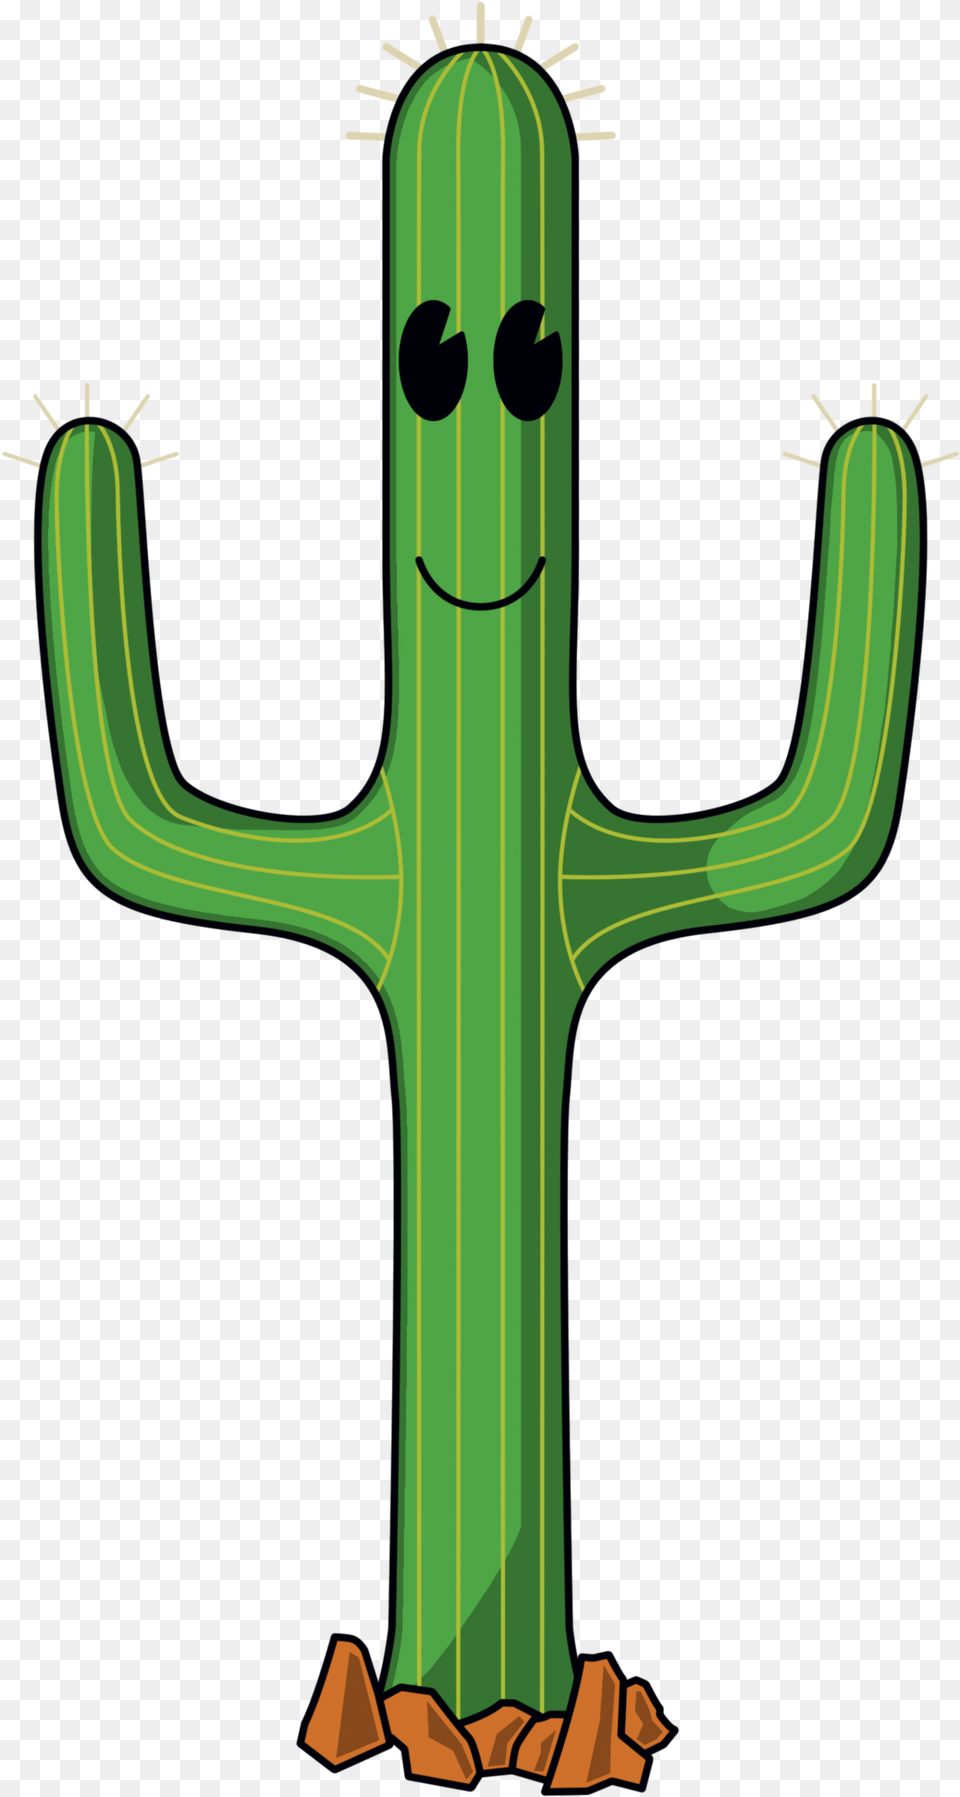 Cartoon Cactus Clipart Library Animated Cactus Transparent Background Cactus Cartoon, Plant, Cross, Symbol Free Png Download